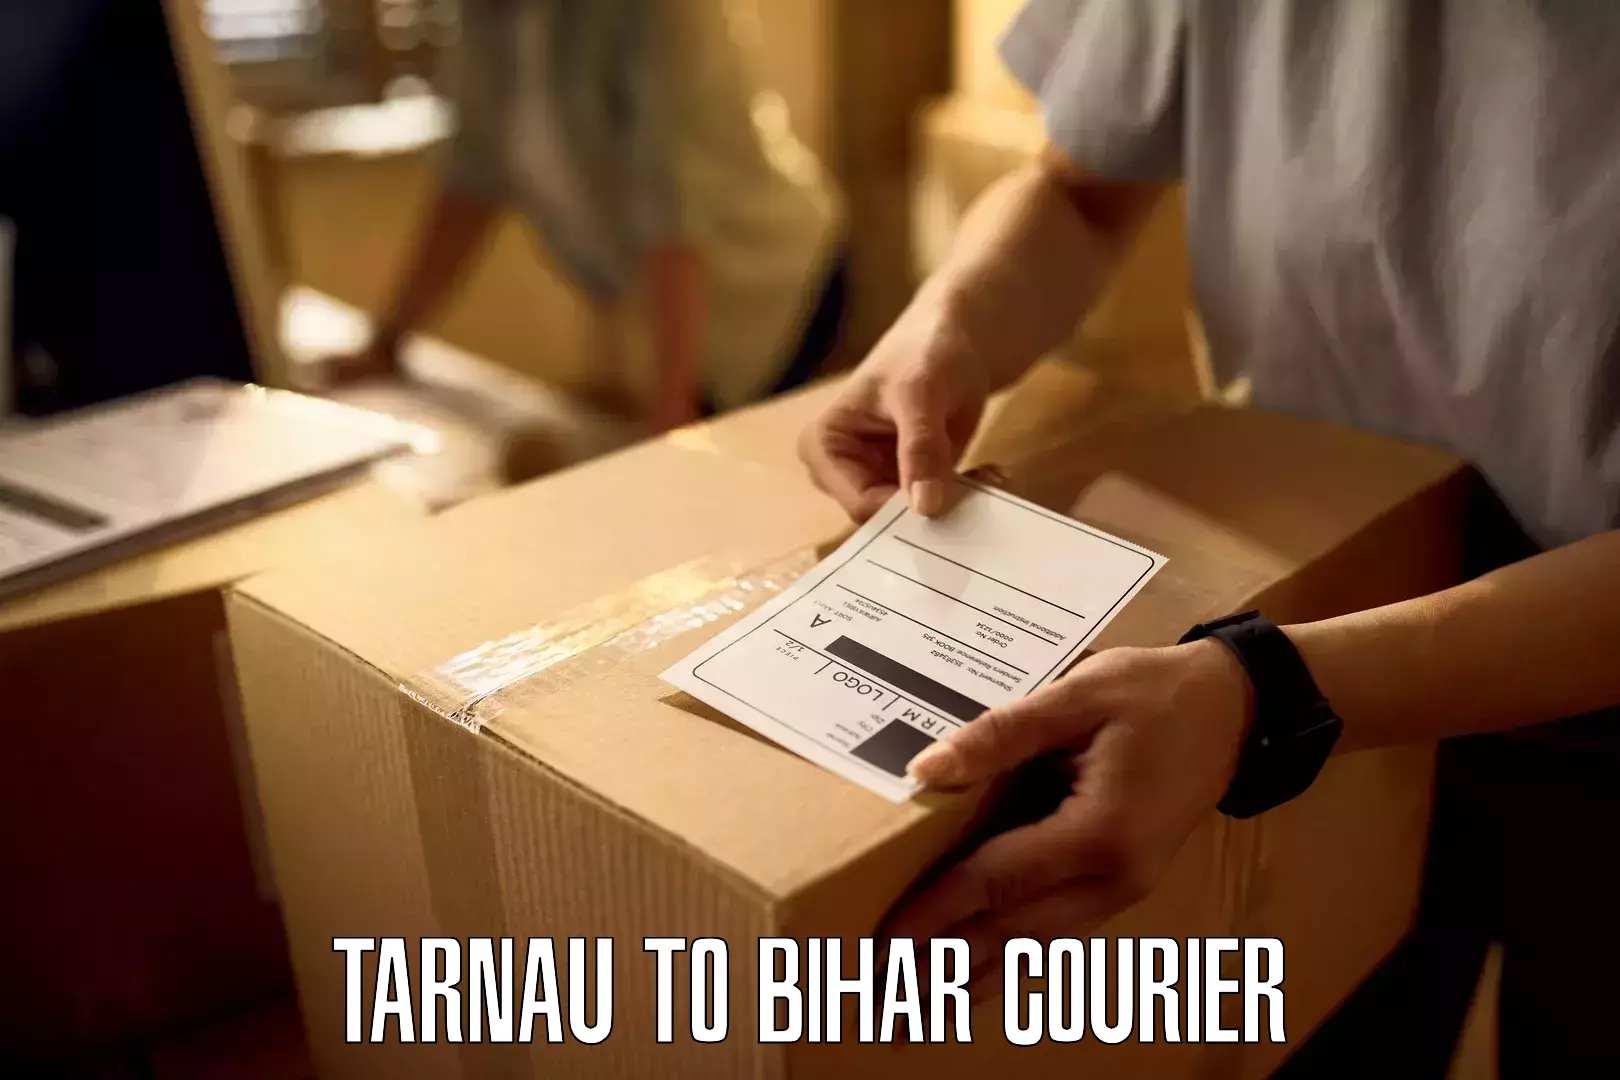 Courier service comparison Tarnau to Kudra